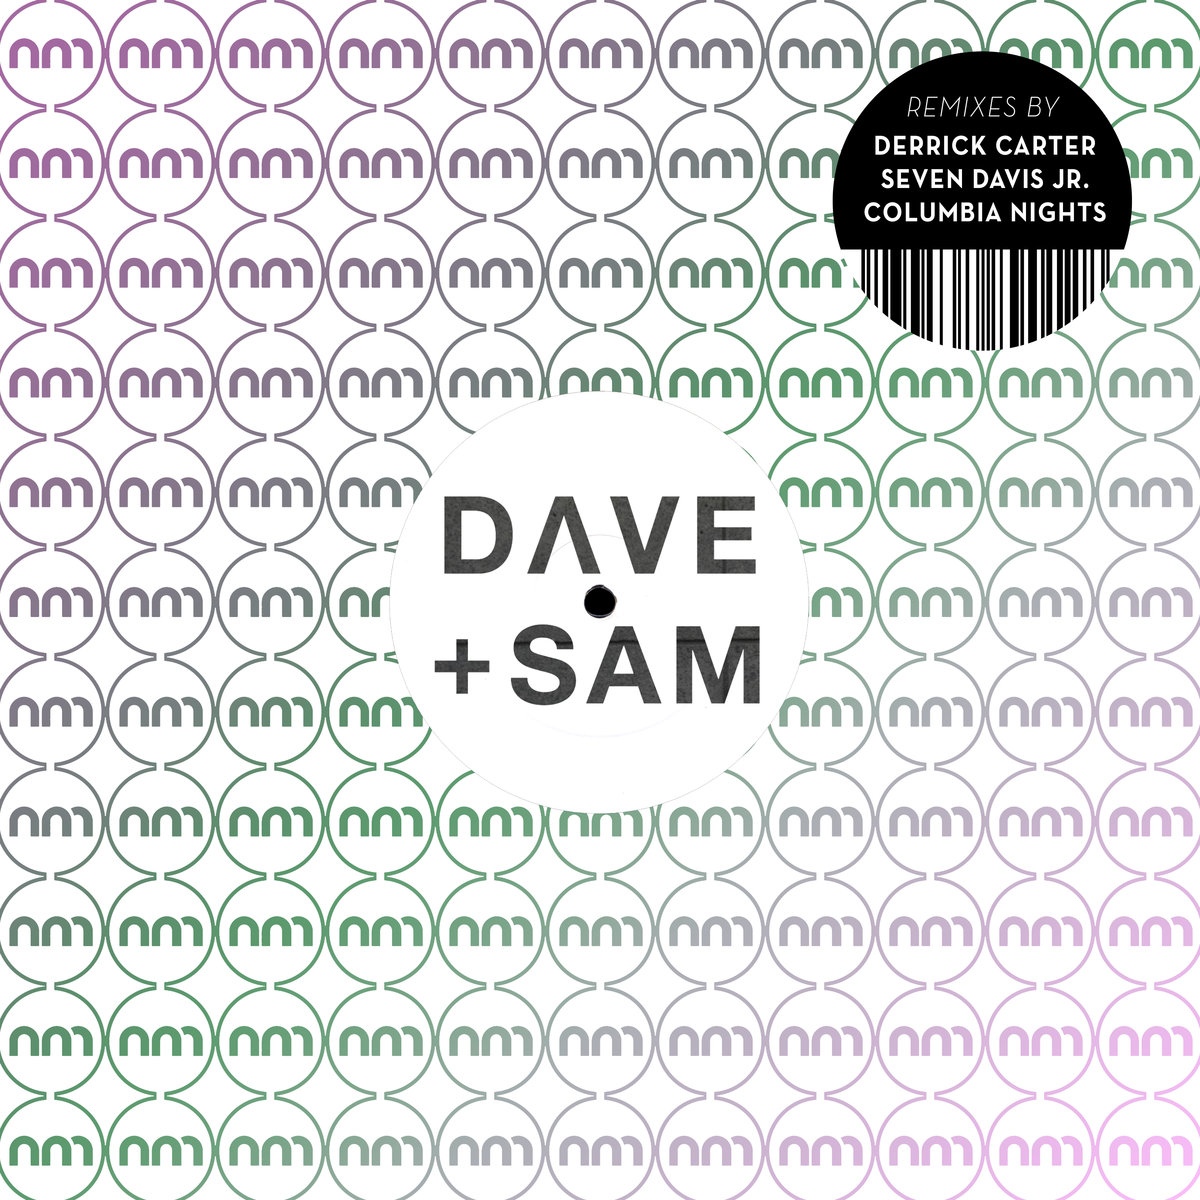 Dave + Sam/YOU DA SHIT REMIXES EP 12"